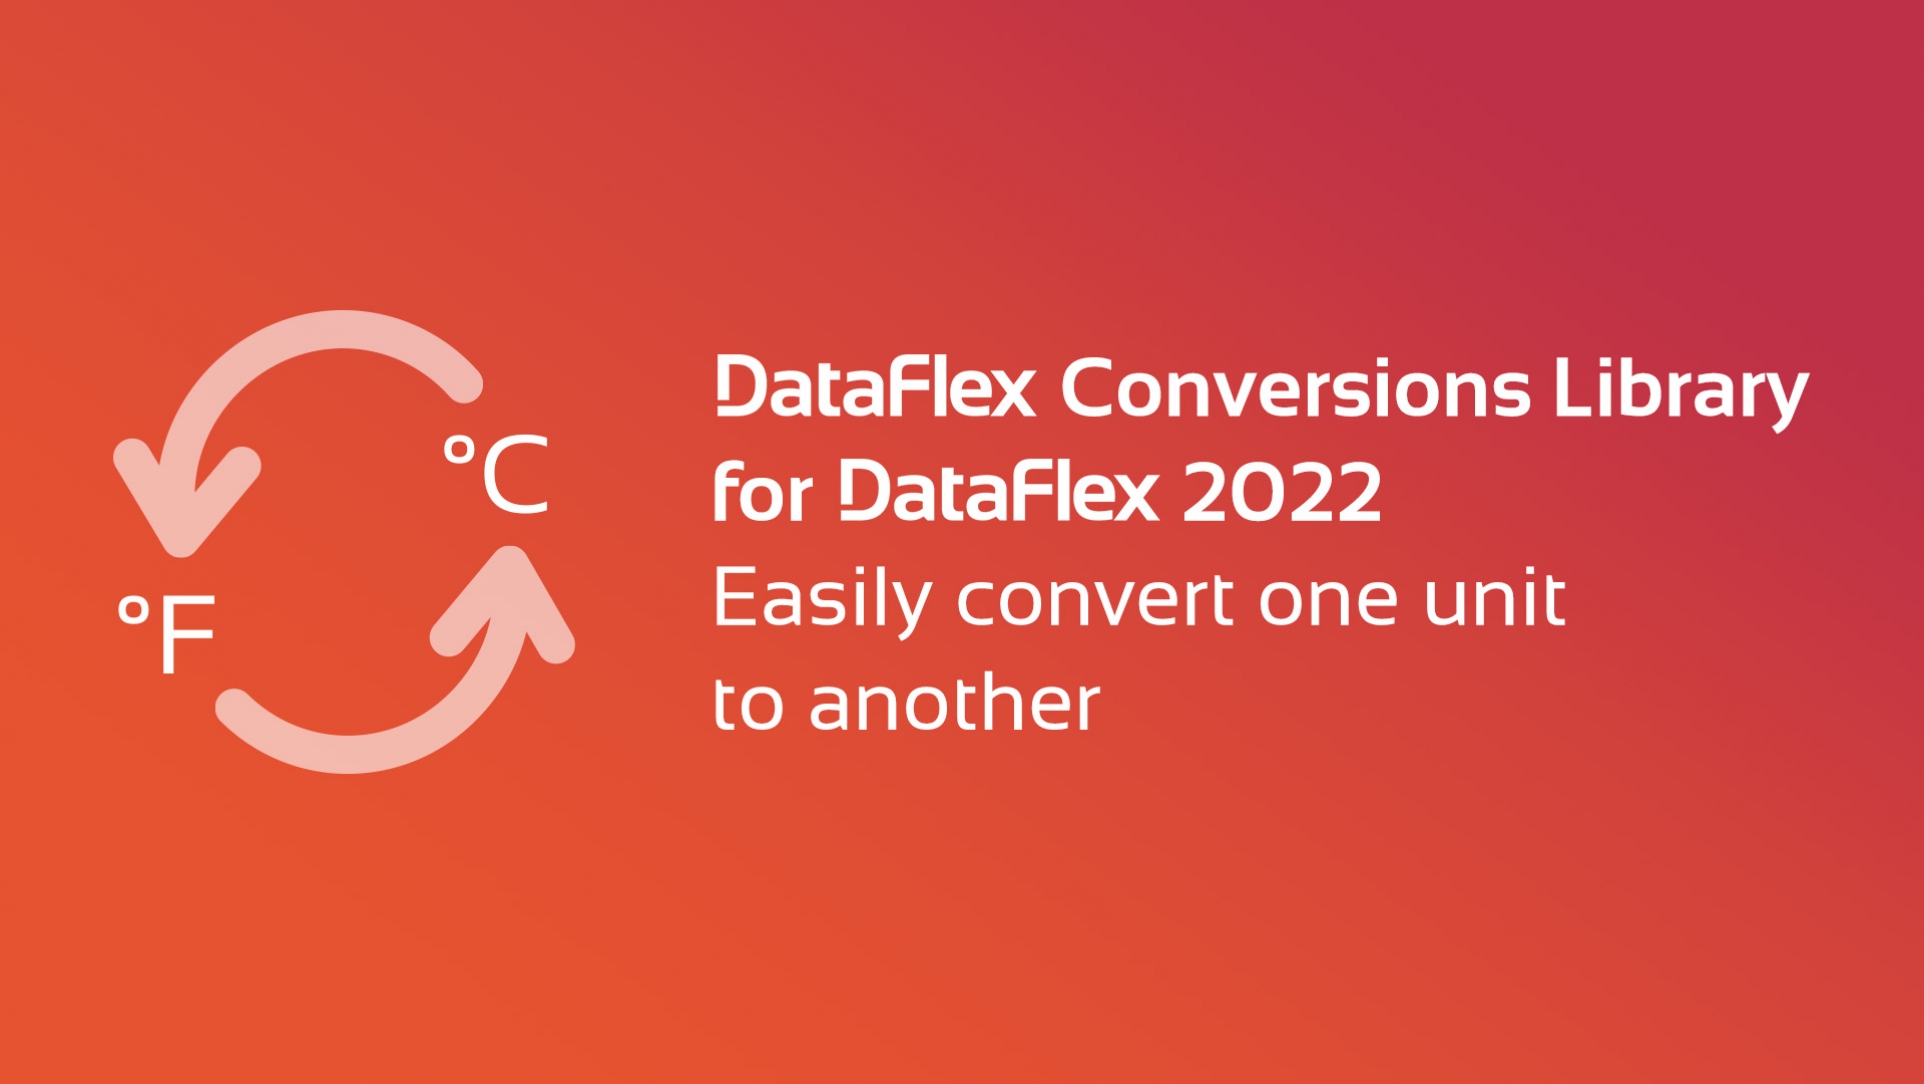 DataFlex Conversions Library